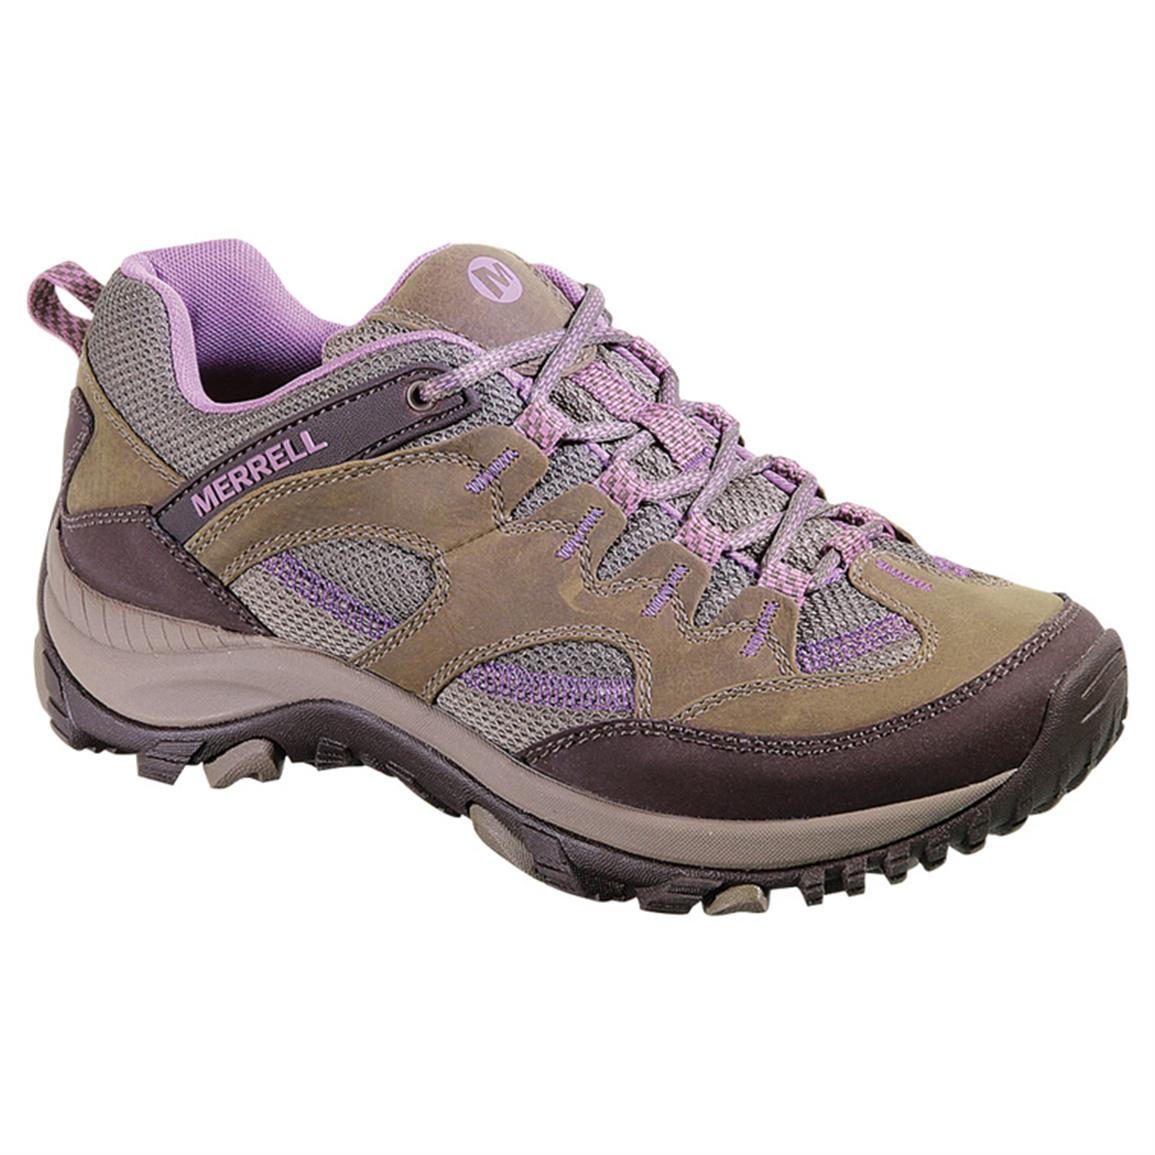 Women's MerrellÂ® Salida Hiking Shoes - 583699, Hiking Boots  Shoes ...